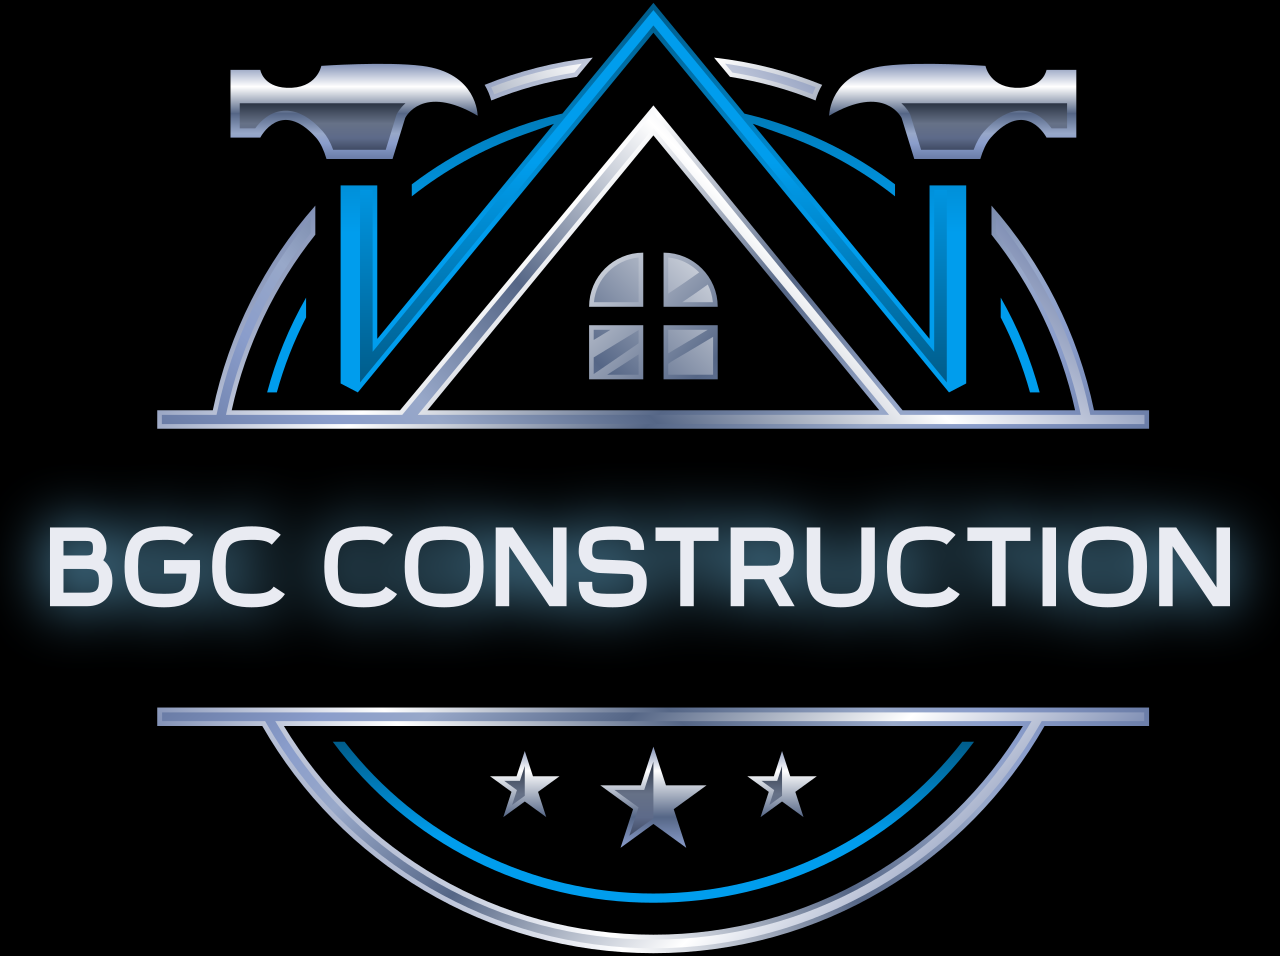 BGC construction 's logo